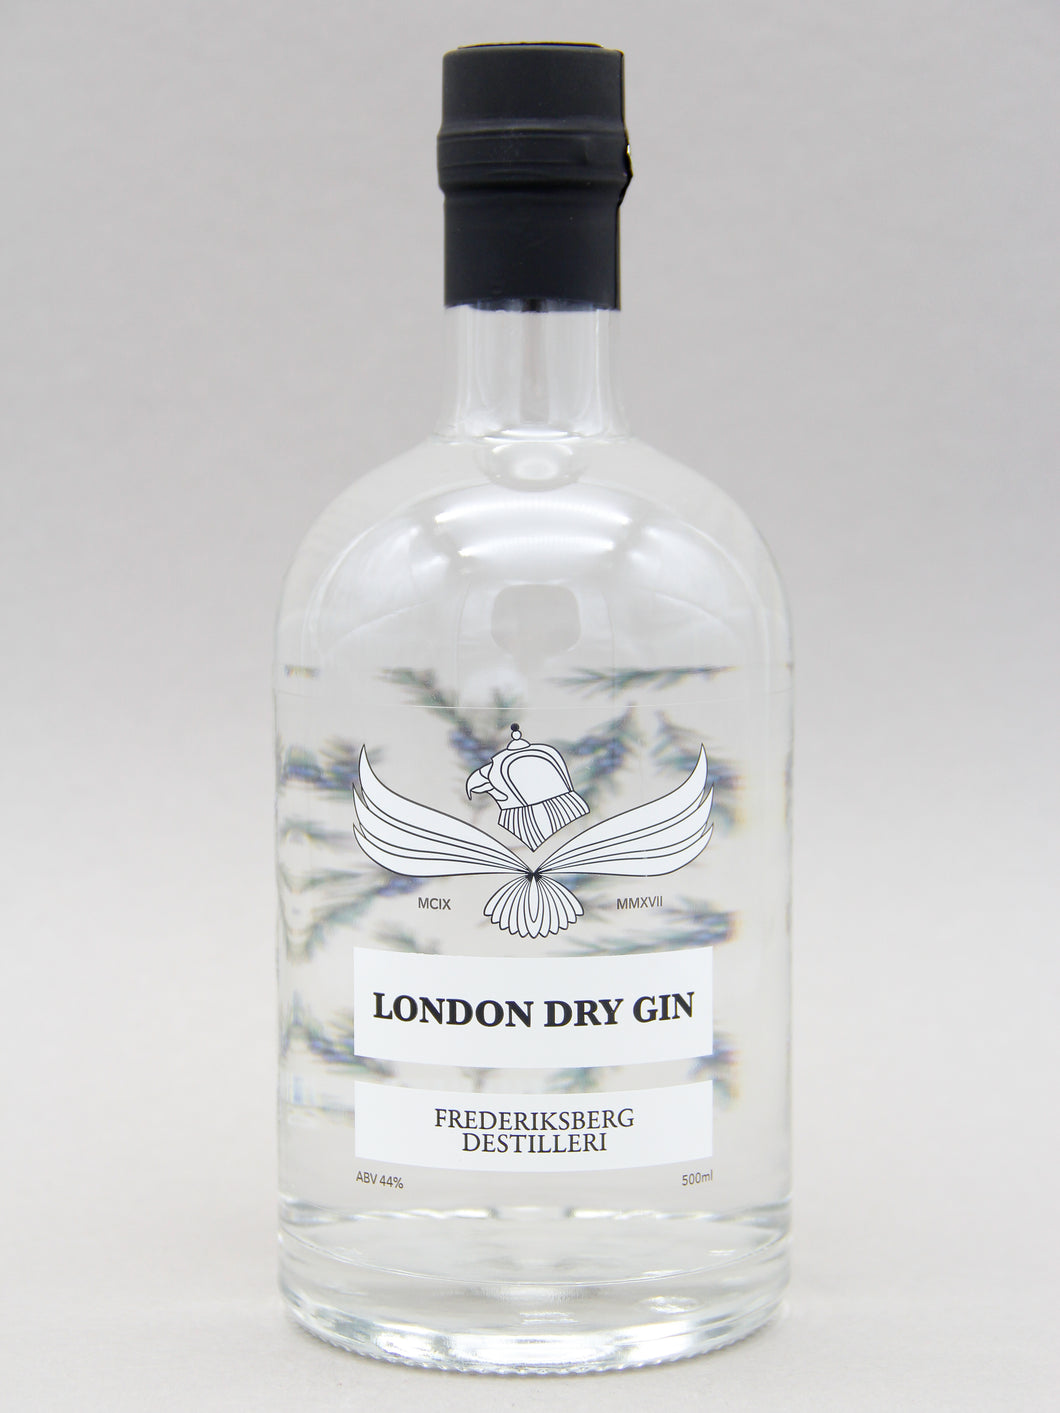 Frederiksberg Distilleri London Dry Gin, Denmark (44%, 50cl)